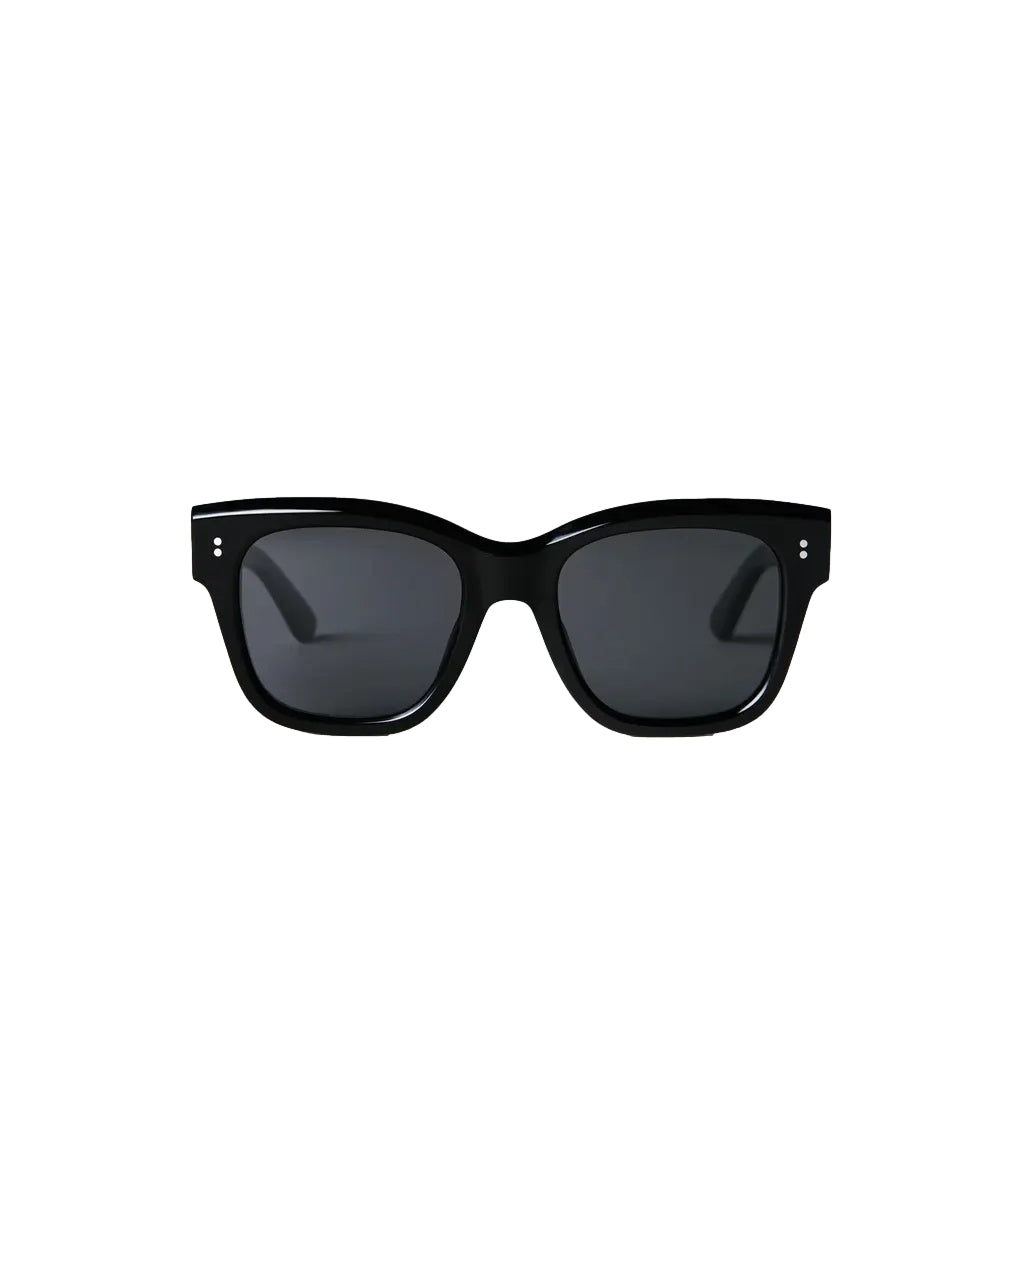 Chimi Eyewear 07 Black Solbriller Sort - modostore.no